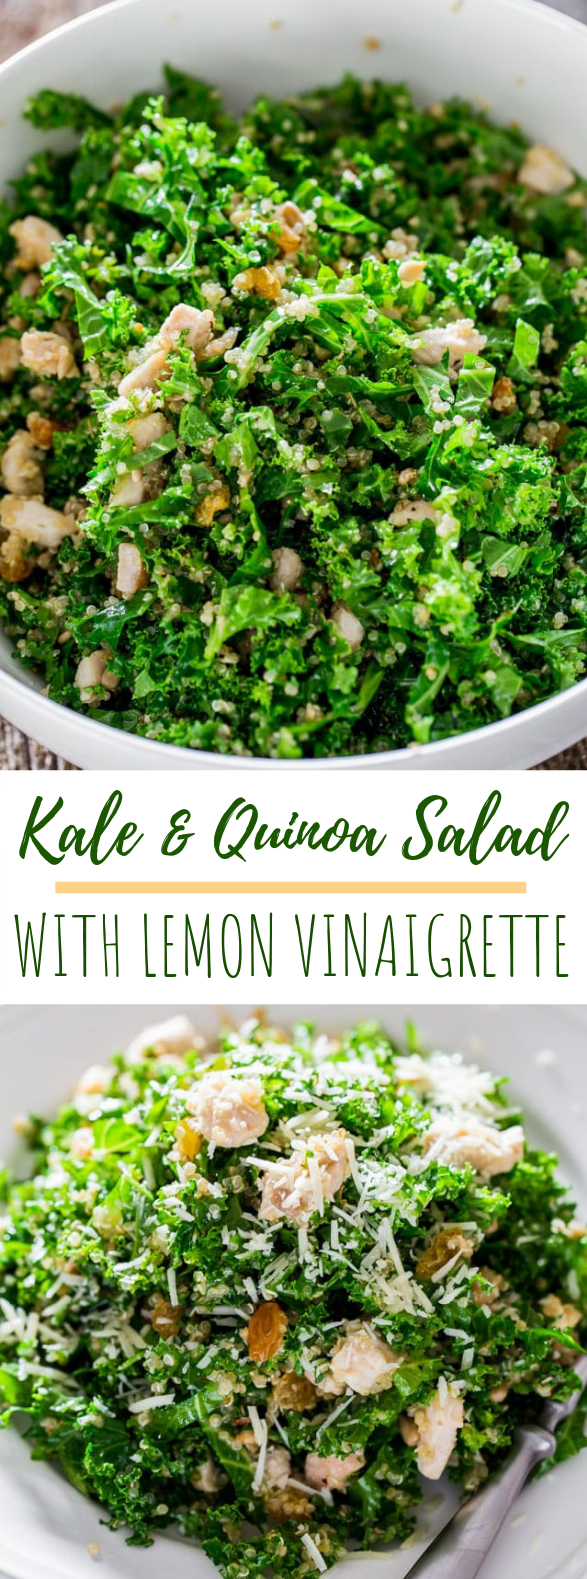 KALE AND QUINOA SALAD WITH LEMON VINAIGRETTE #vegetarian #salads #veggies #vegetables #heatlhy